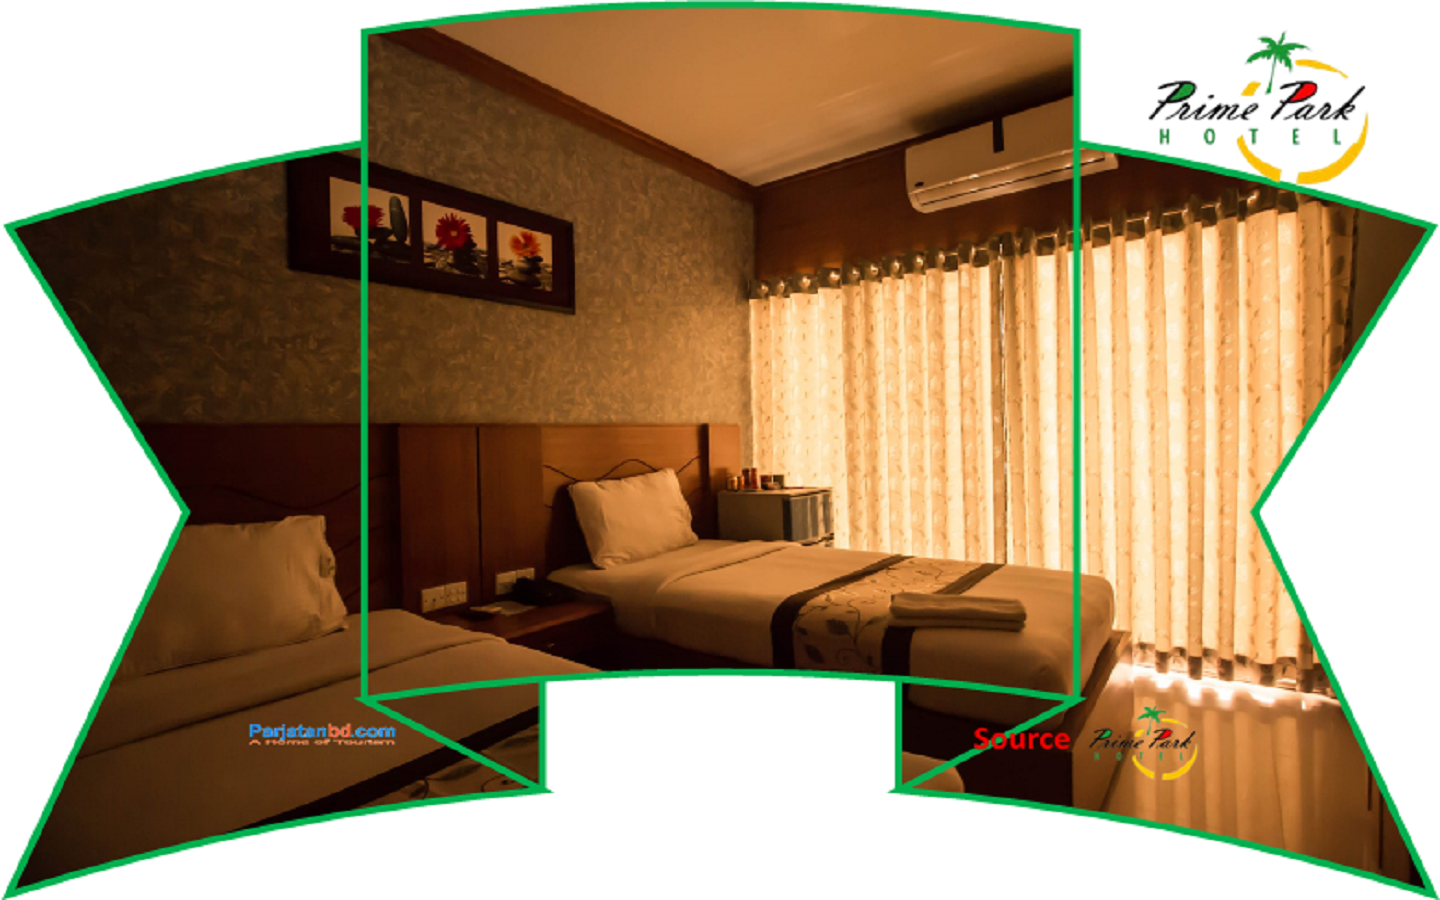 Room Twin Premium Room -1, Prime Park Hotel, Coxs Bazar